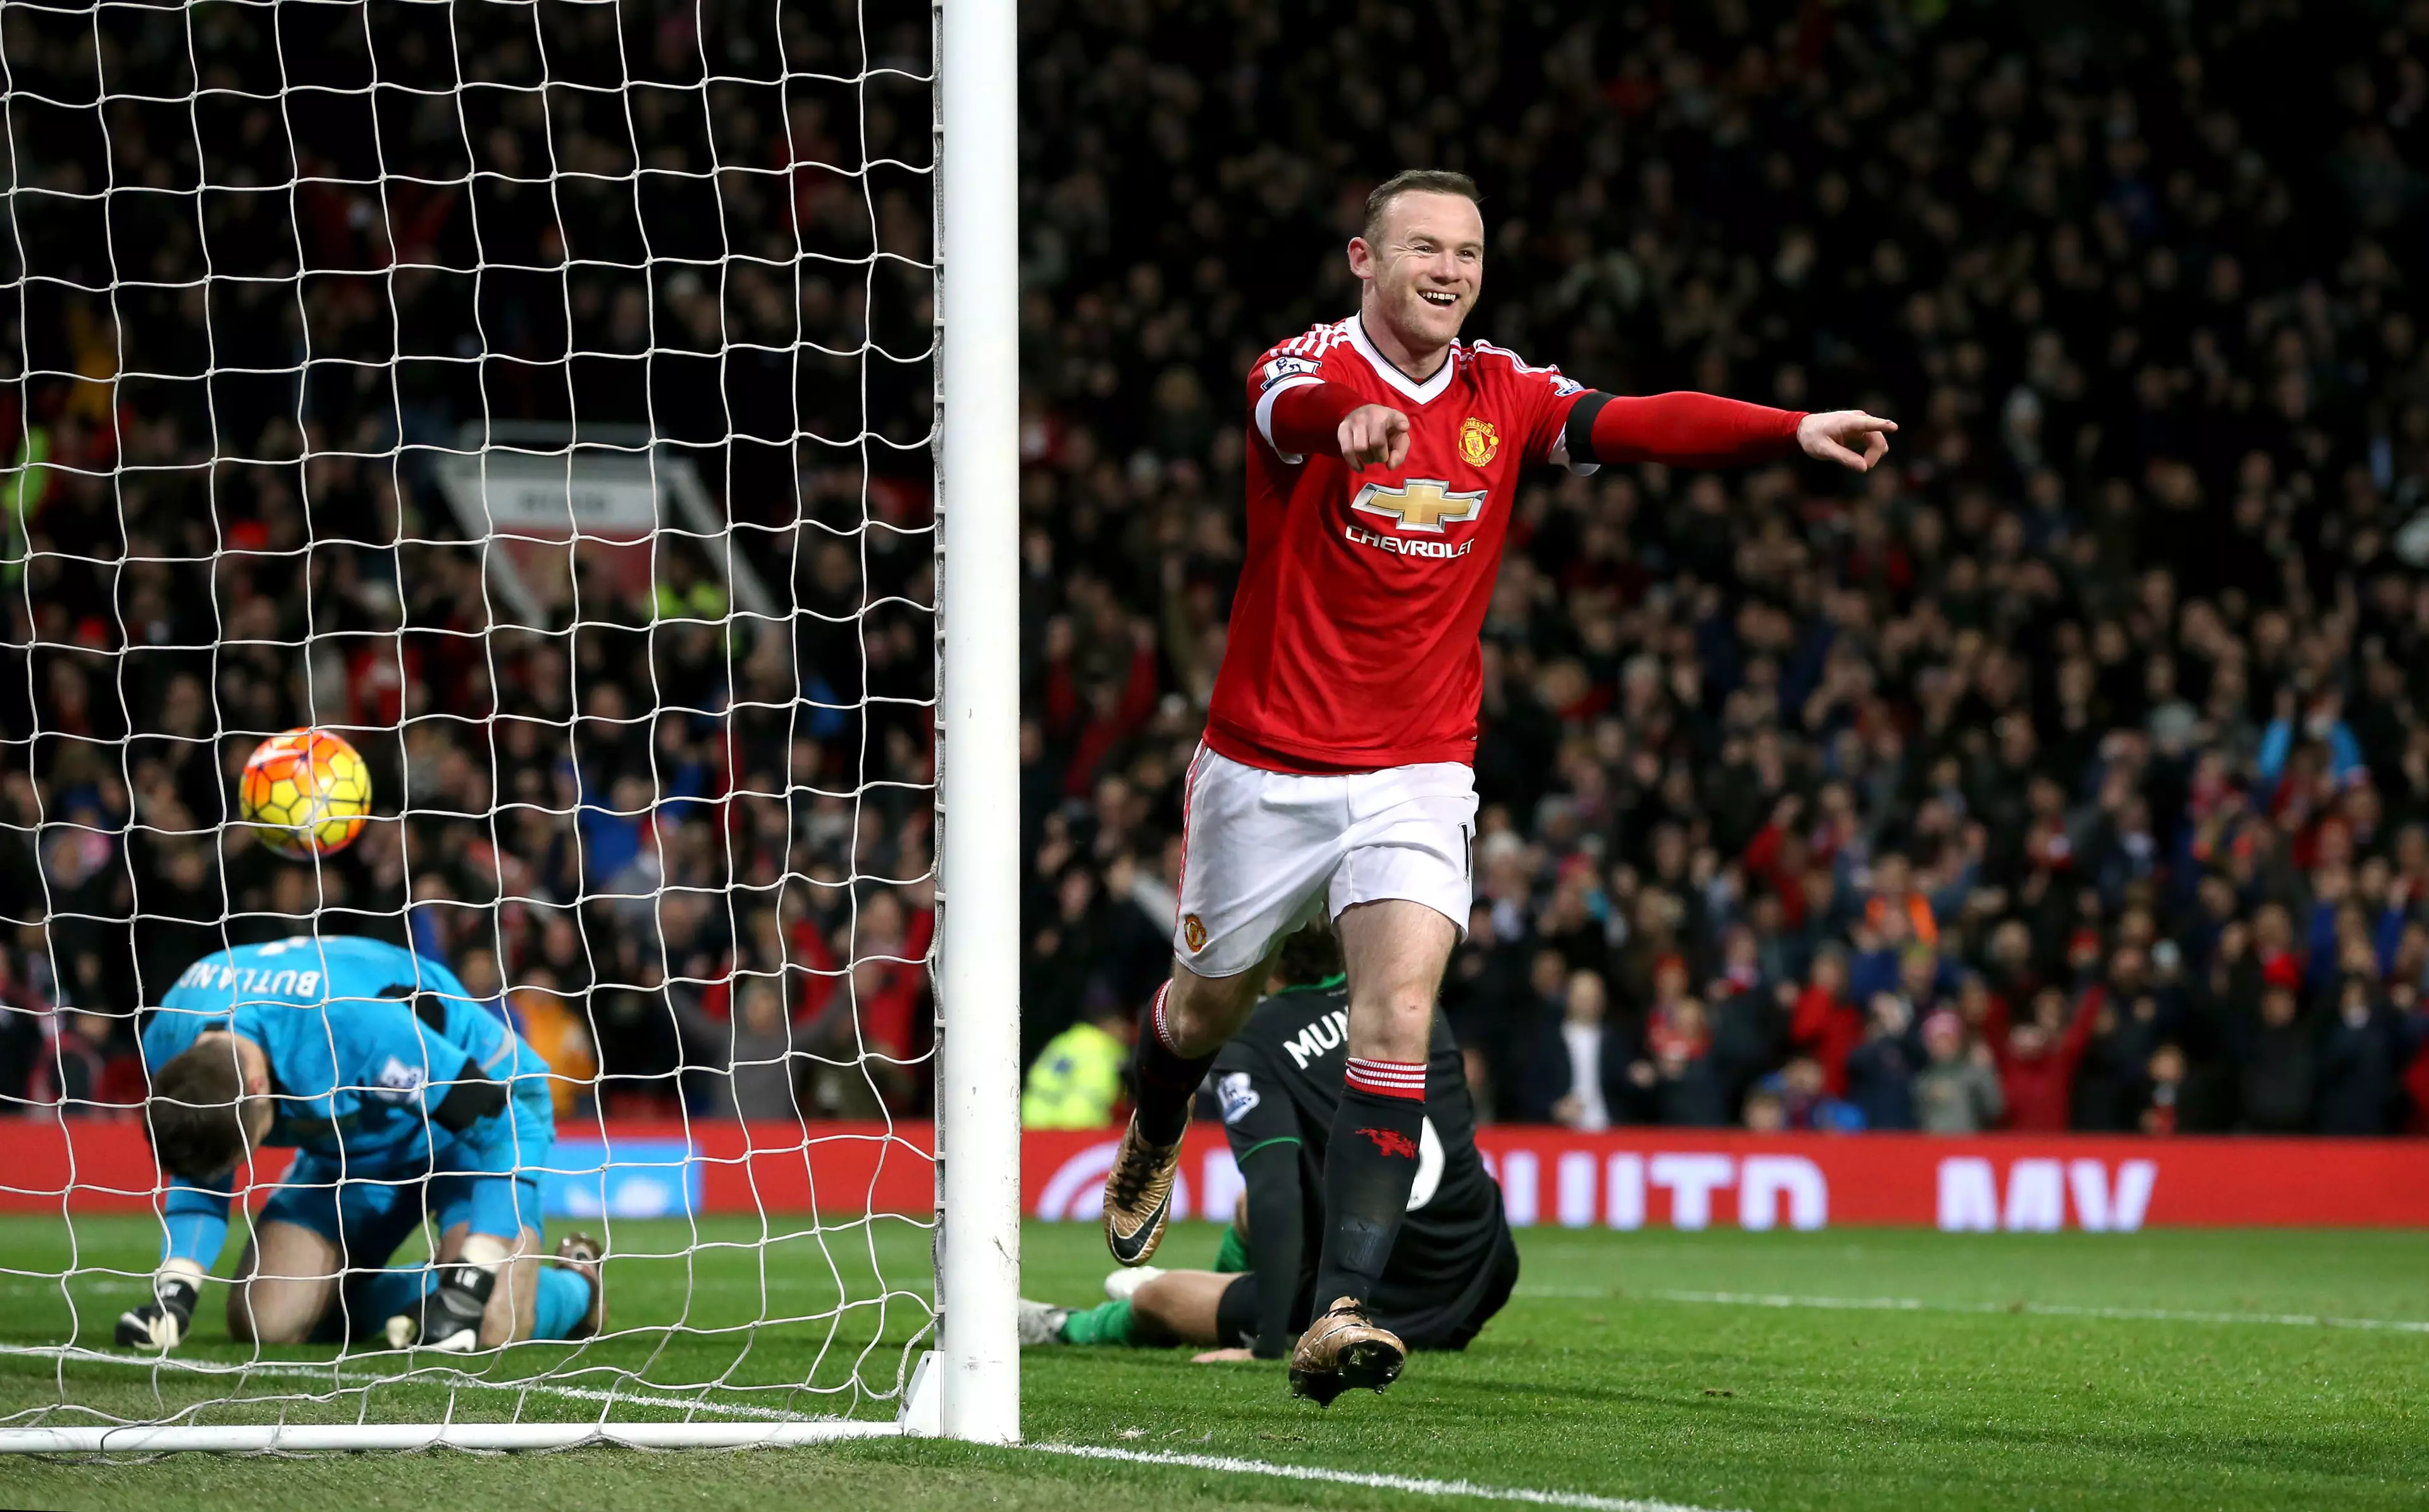 Odds On Rooney To Return To Everton Slashed